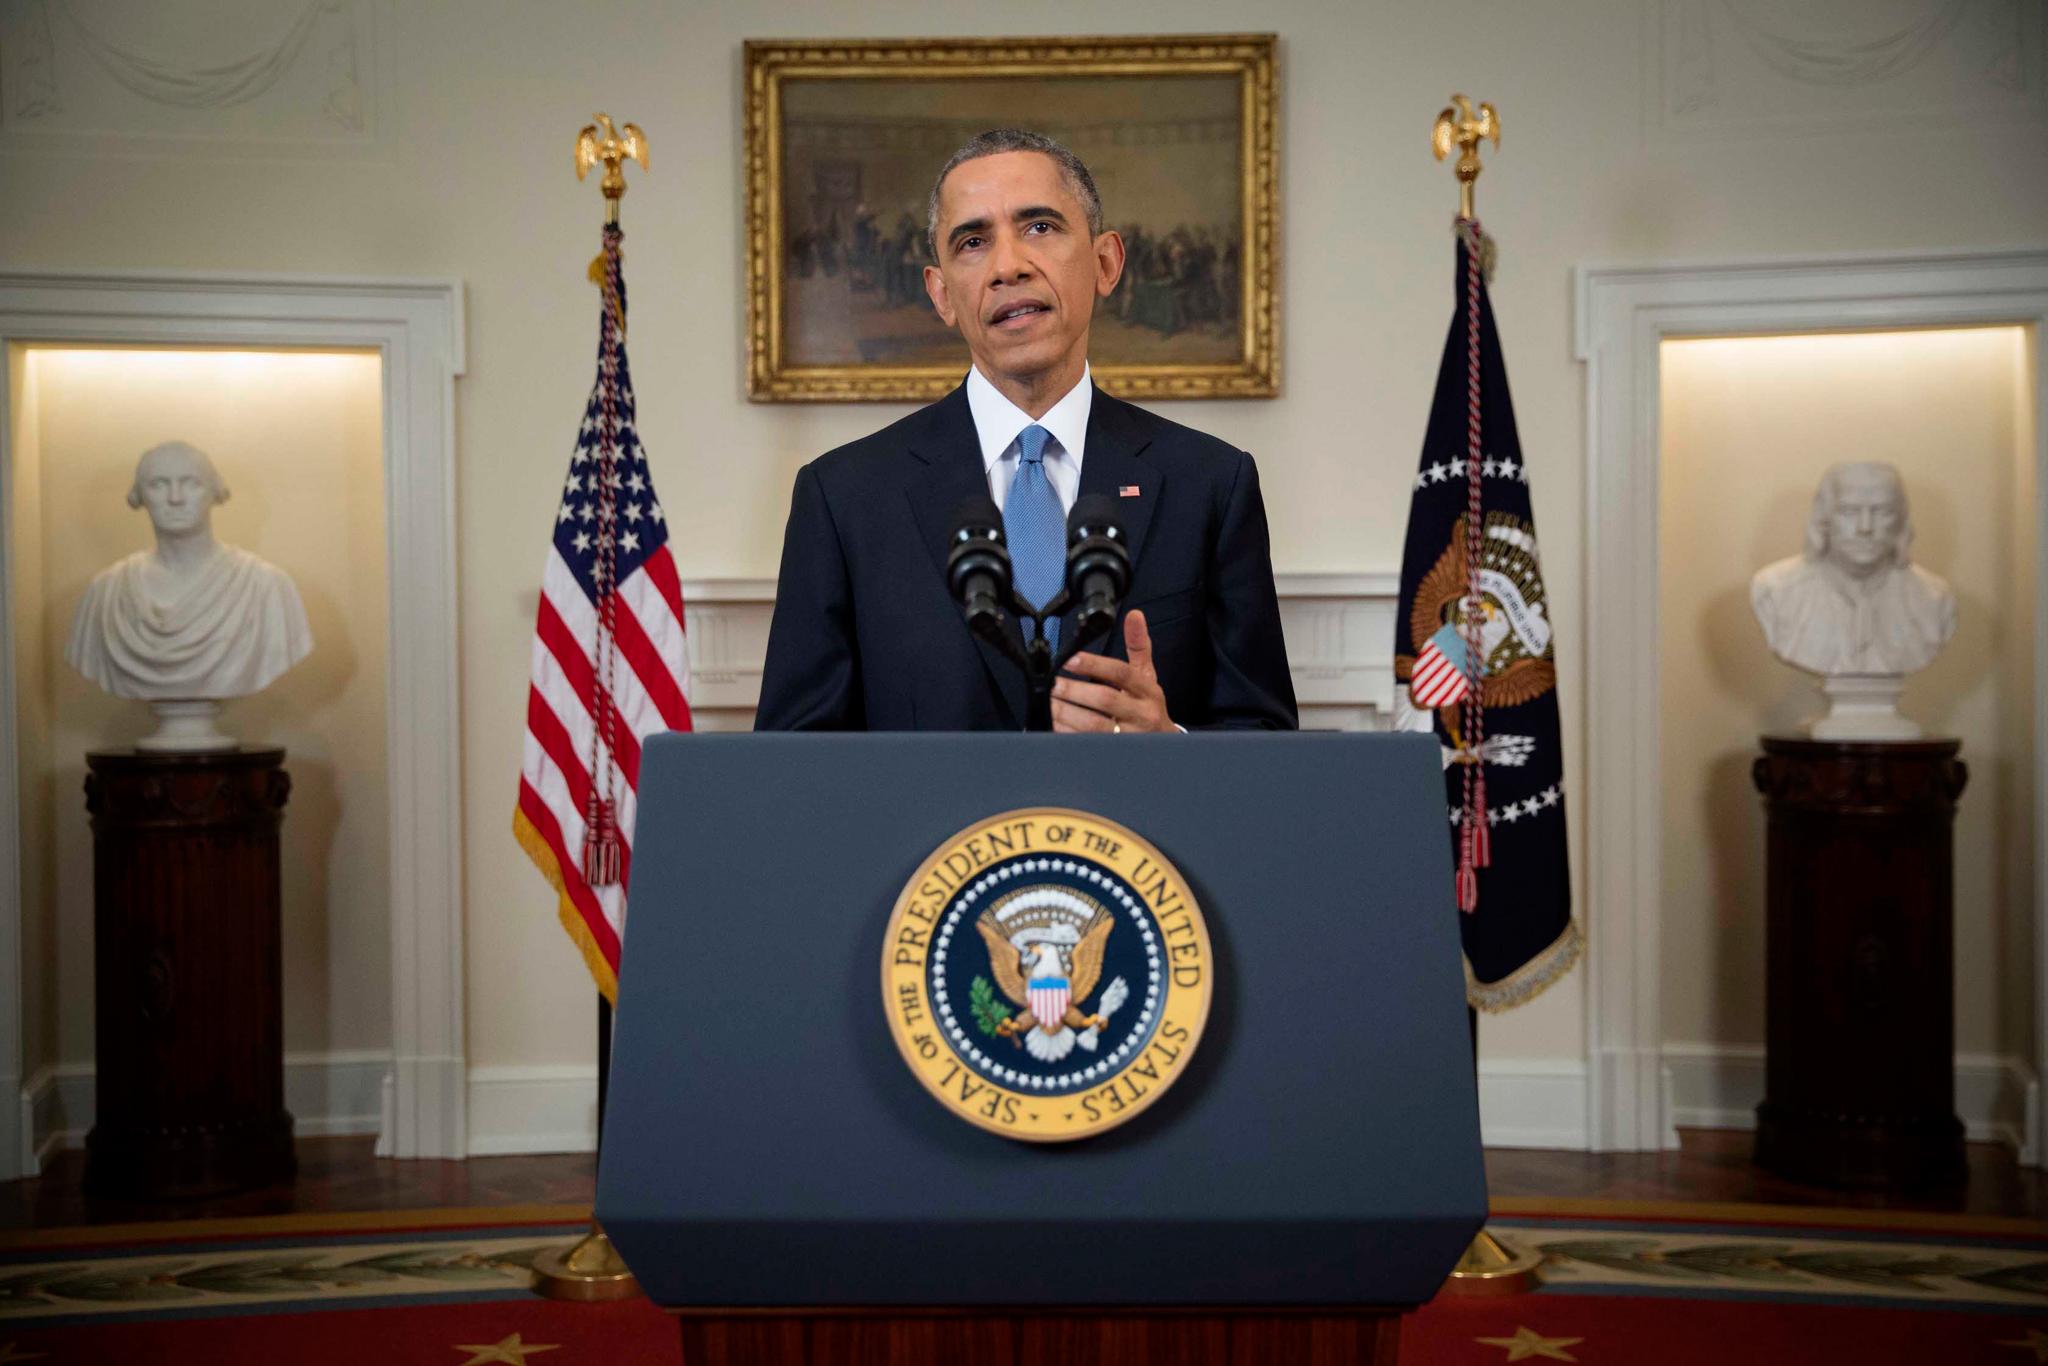 President Obama Calls the Lack of Gun Control Laws ‘Distressing’